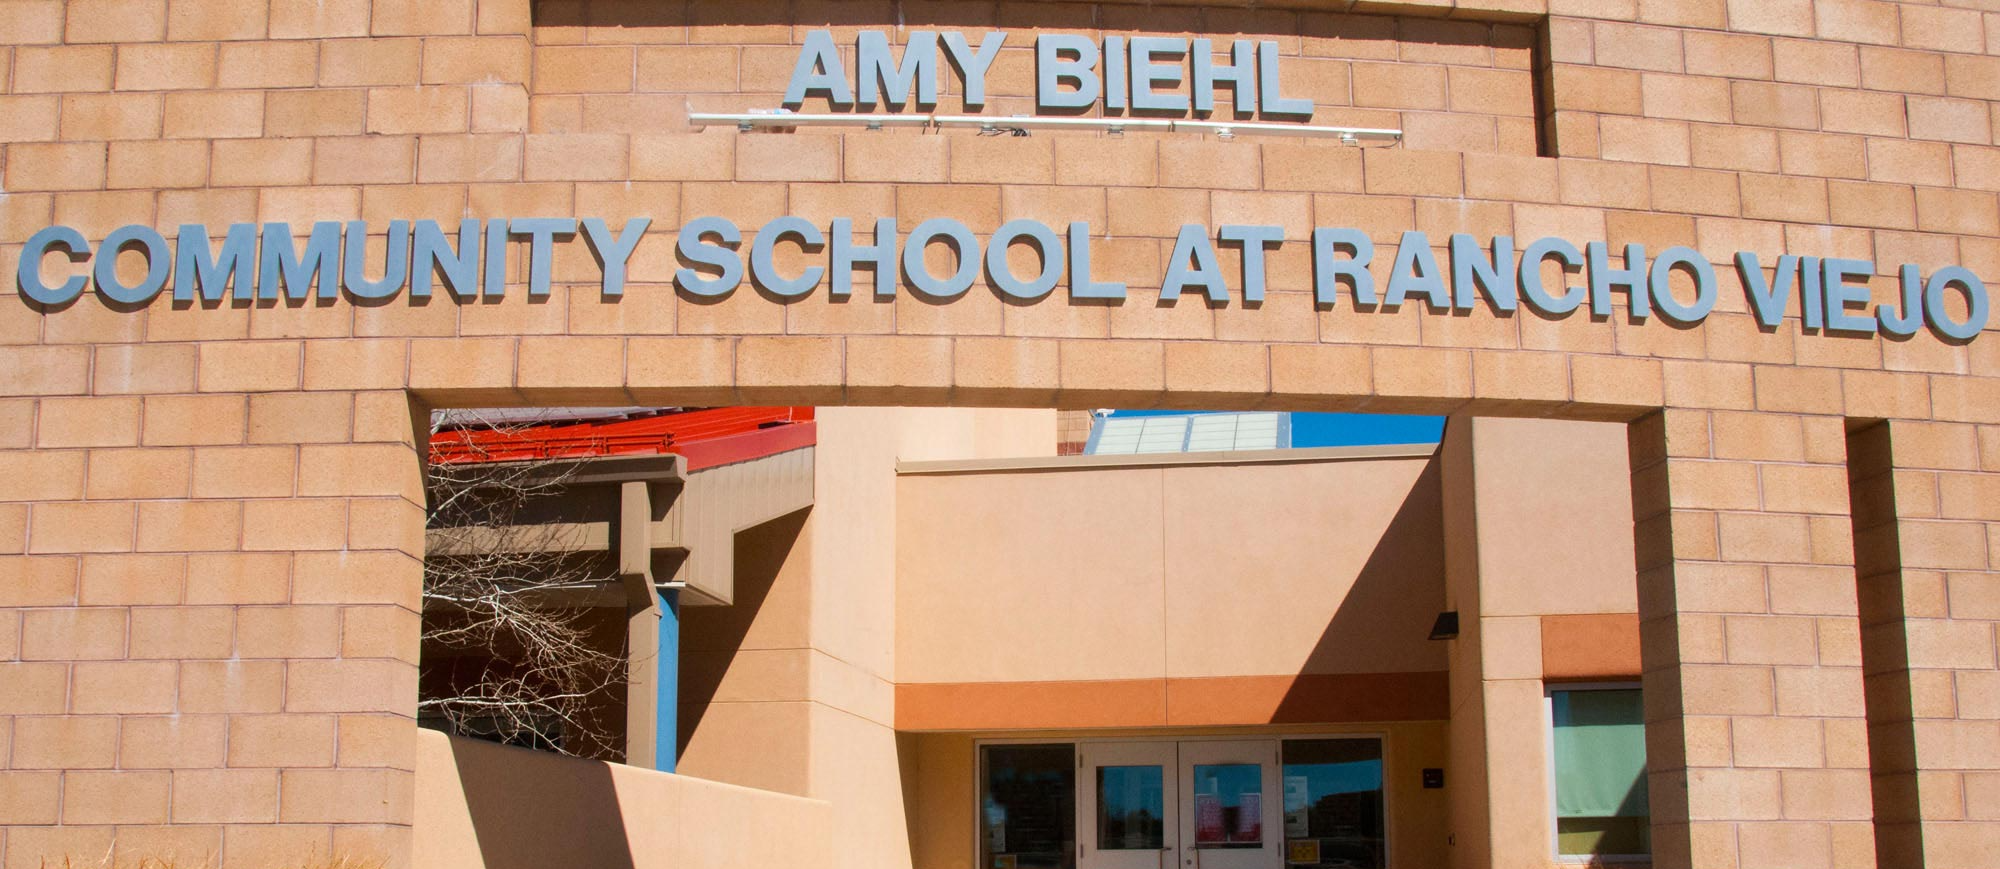 Amy Biehl Community School exterior